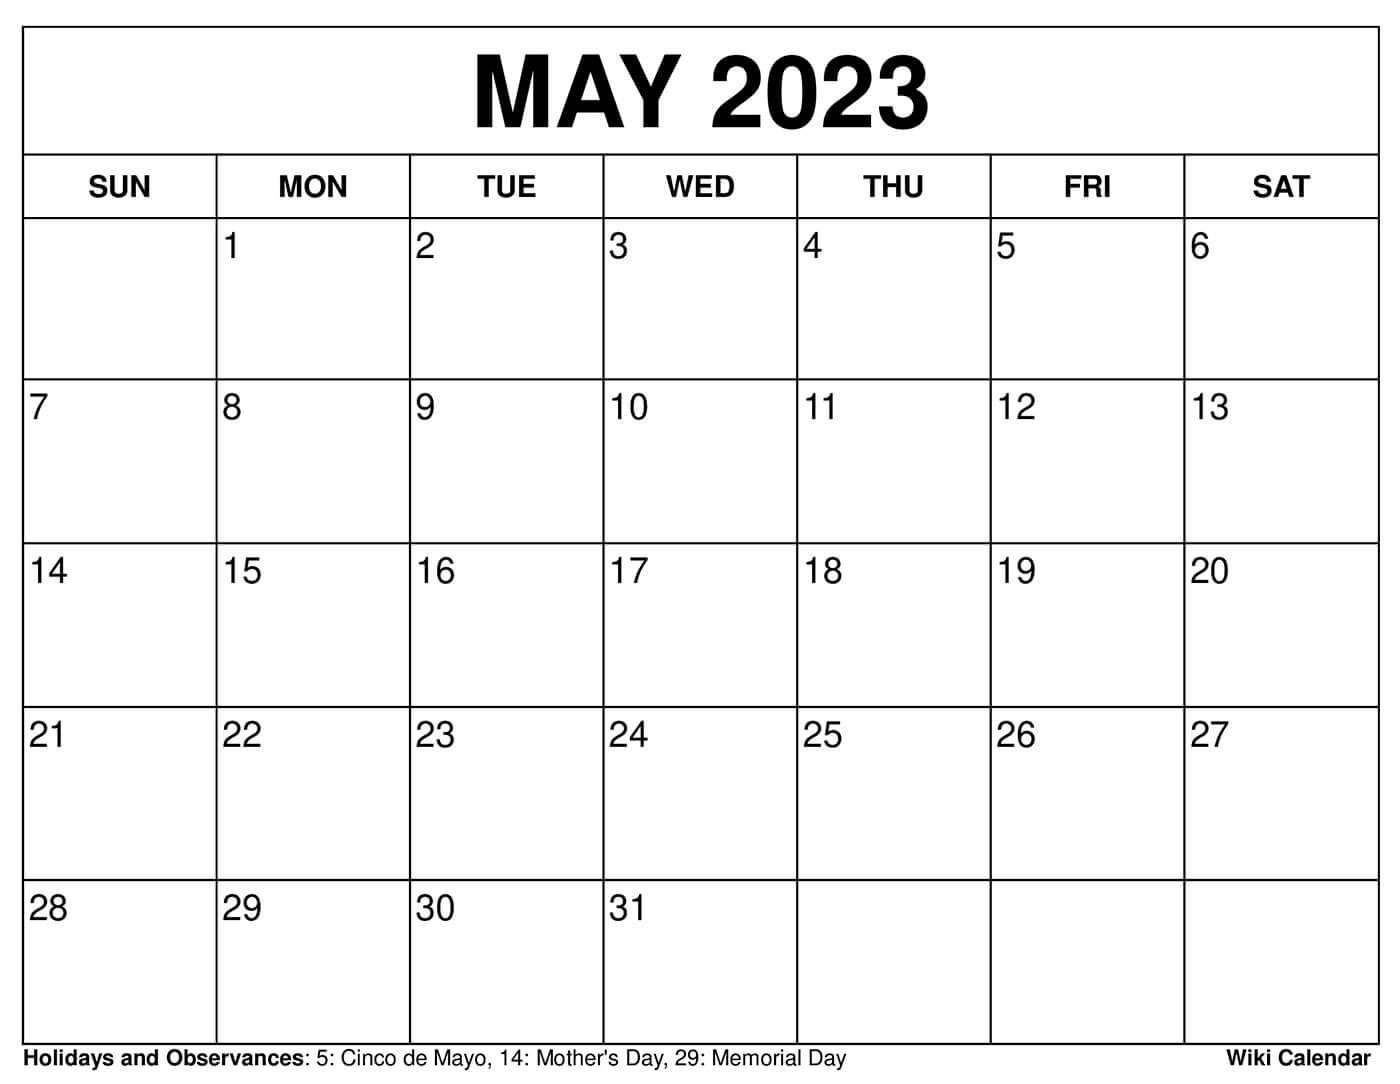 May 2022 Weekly Calendar Free Printable May 2022 Calendars - Wiki Calendar